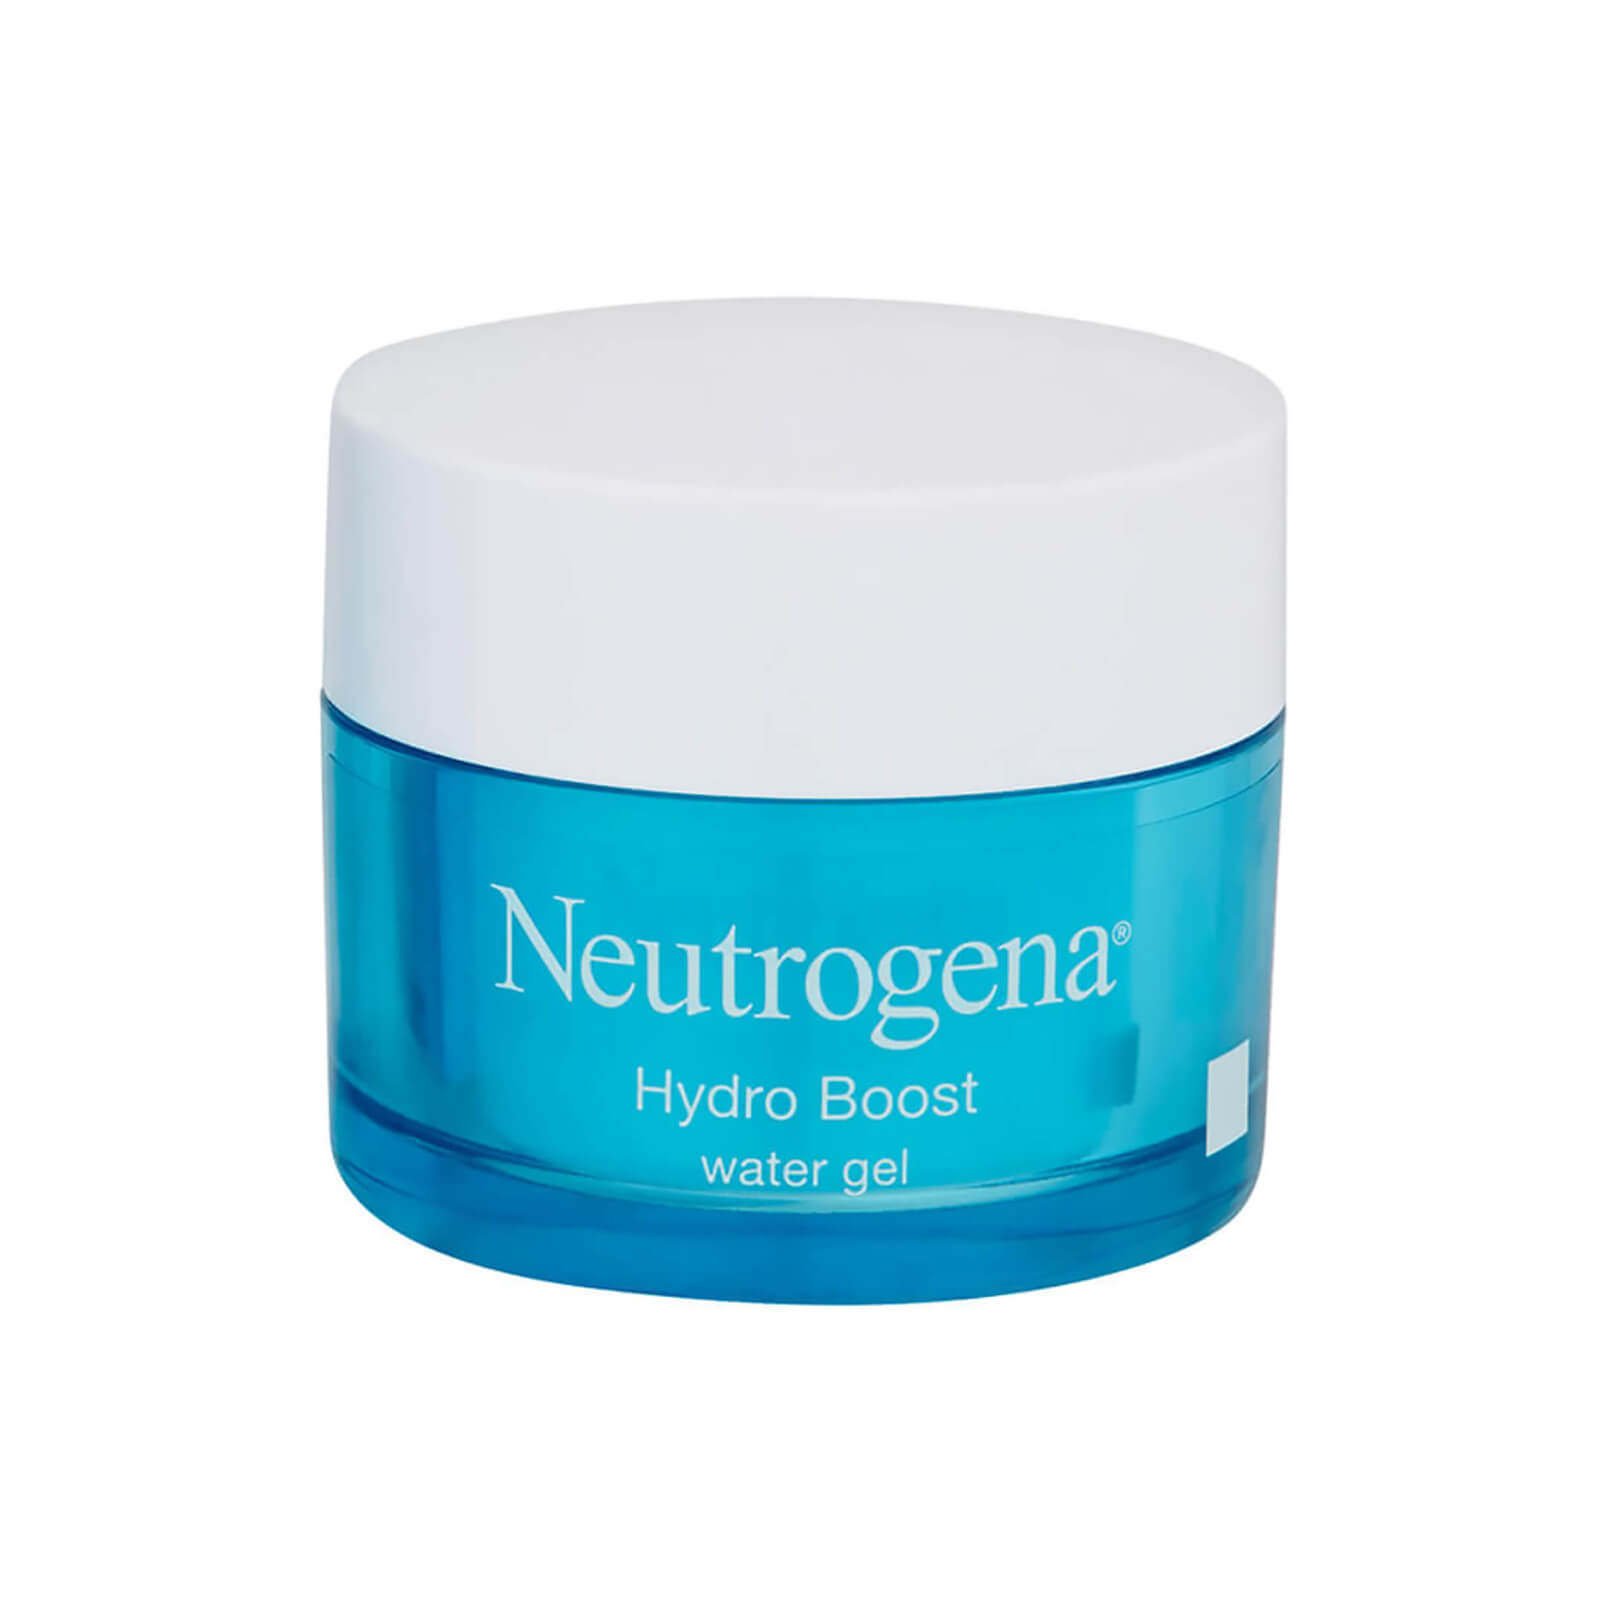 Neutrogena Hydro Boost Water Gel Moisturiser with Hyaluronic Acid for Dry Skin 50ml